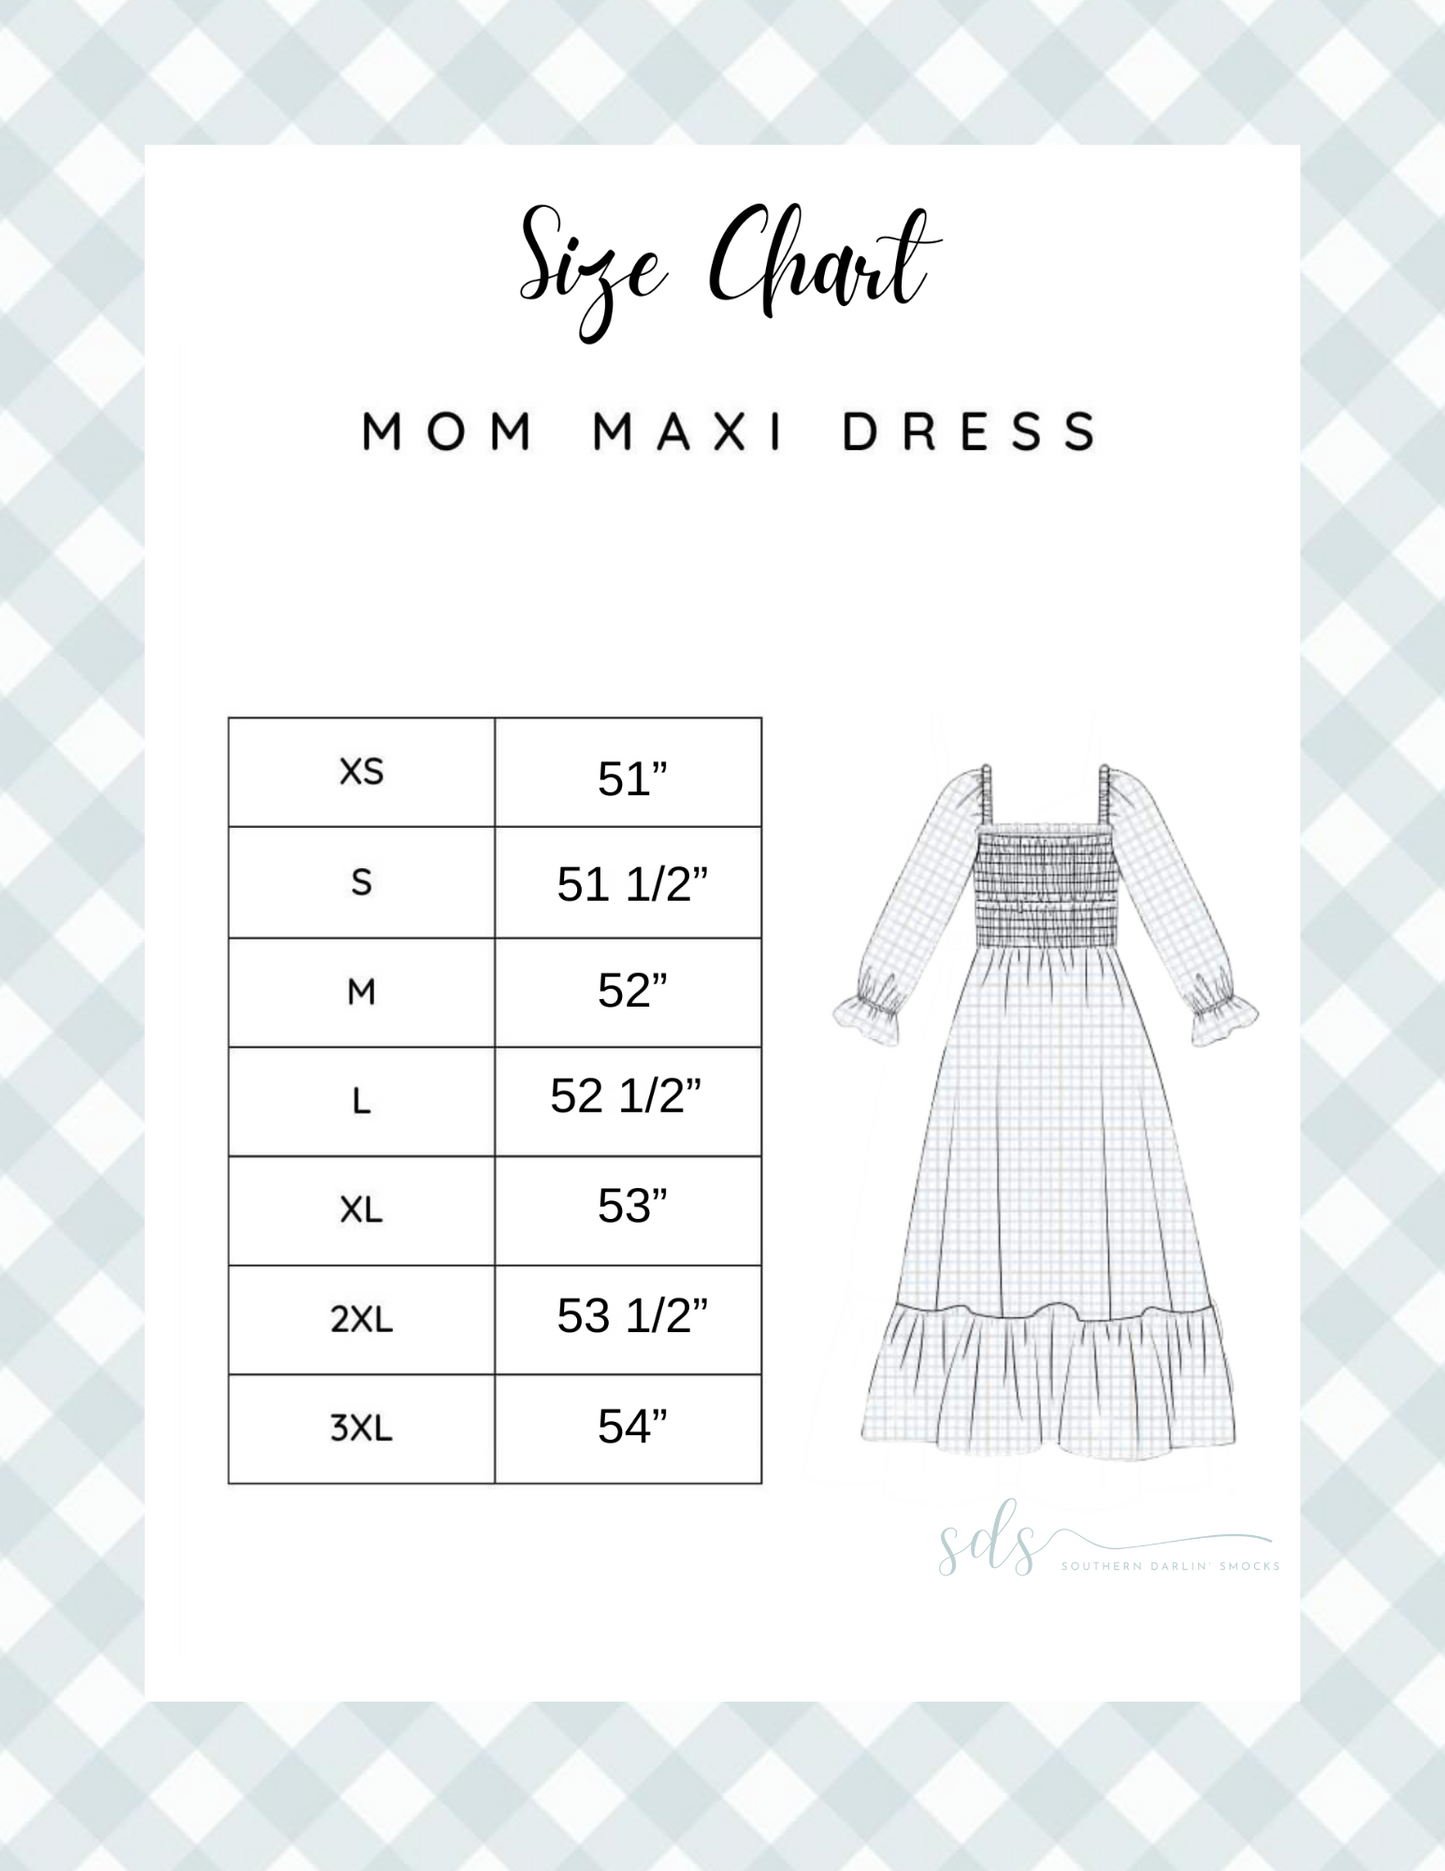 MOM MAXI DRESS SIZE CHART